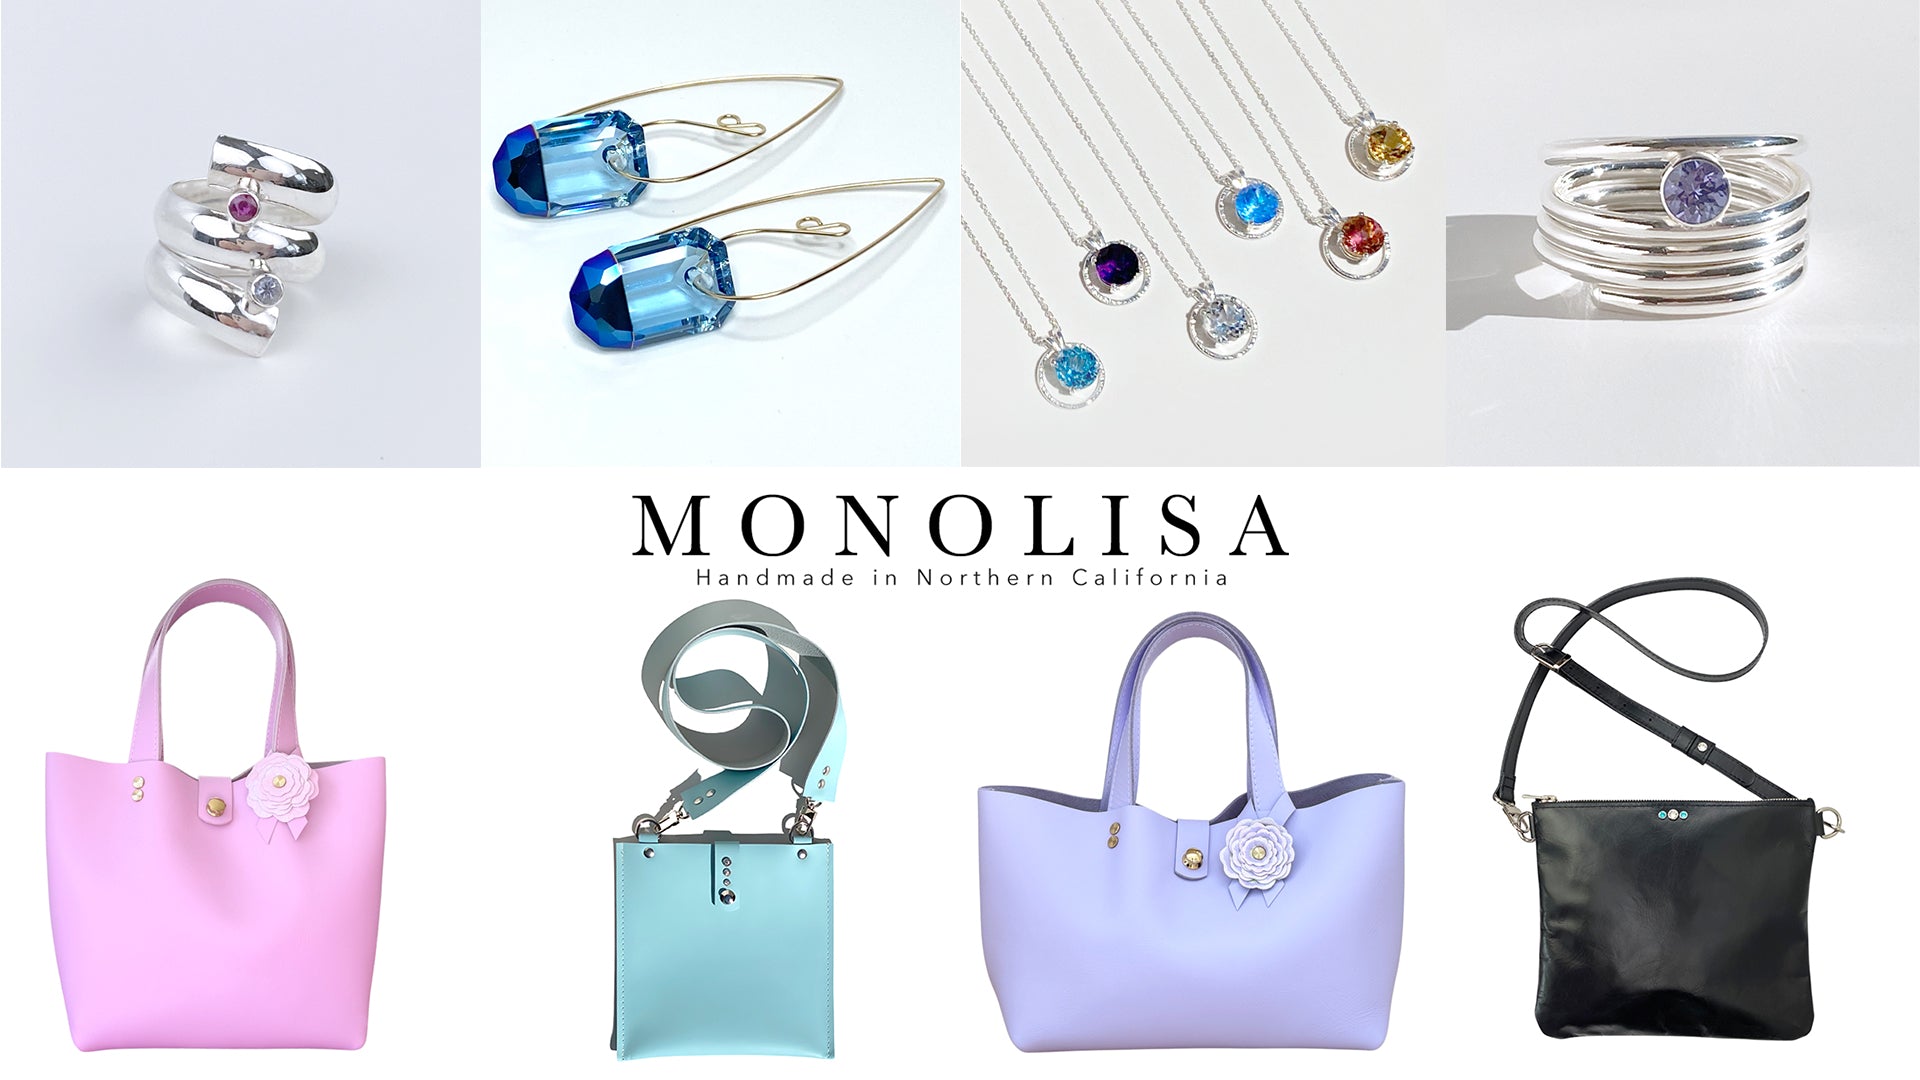 MONOLISA Handbags & Jewelry Collection By Artist Lisa Ramos